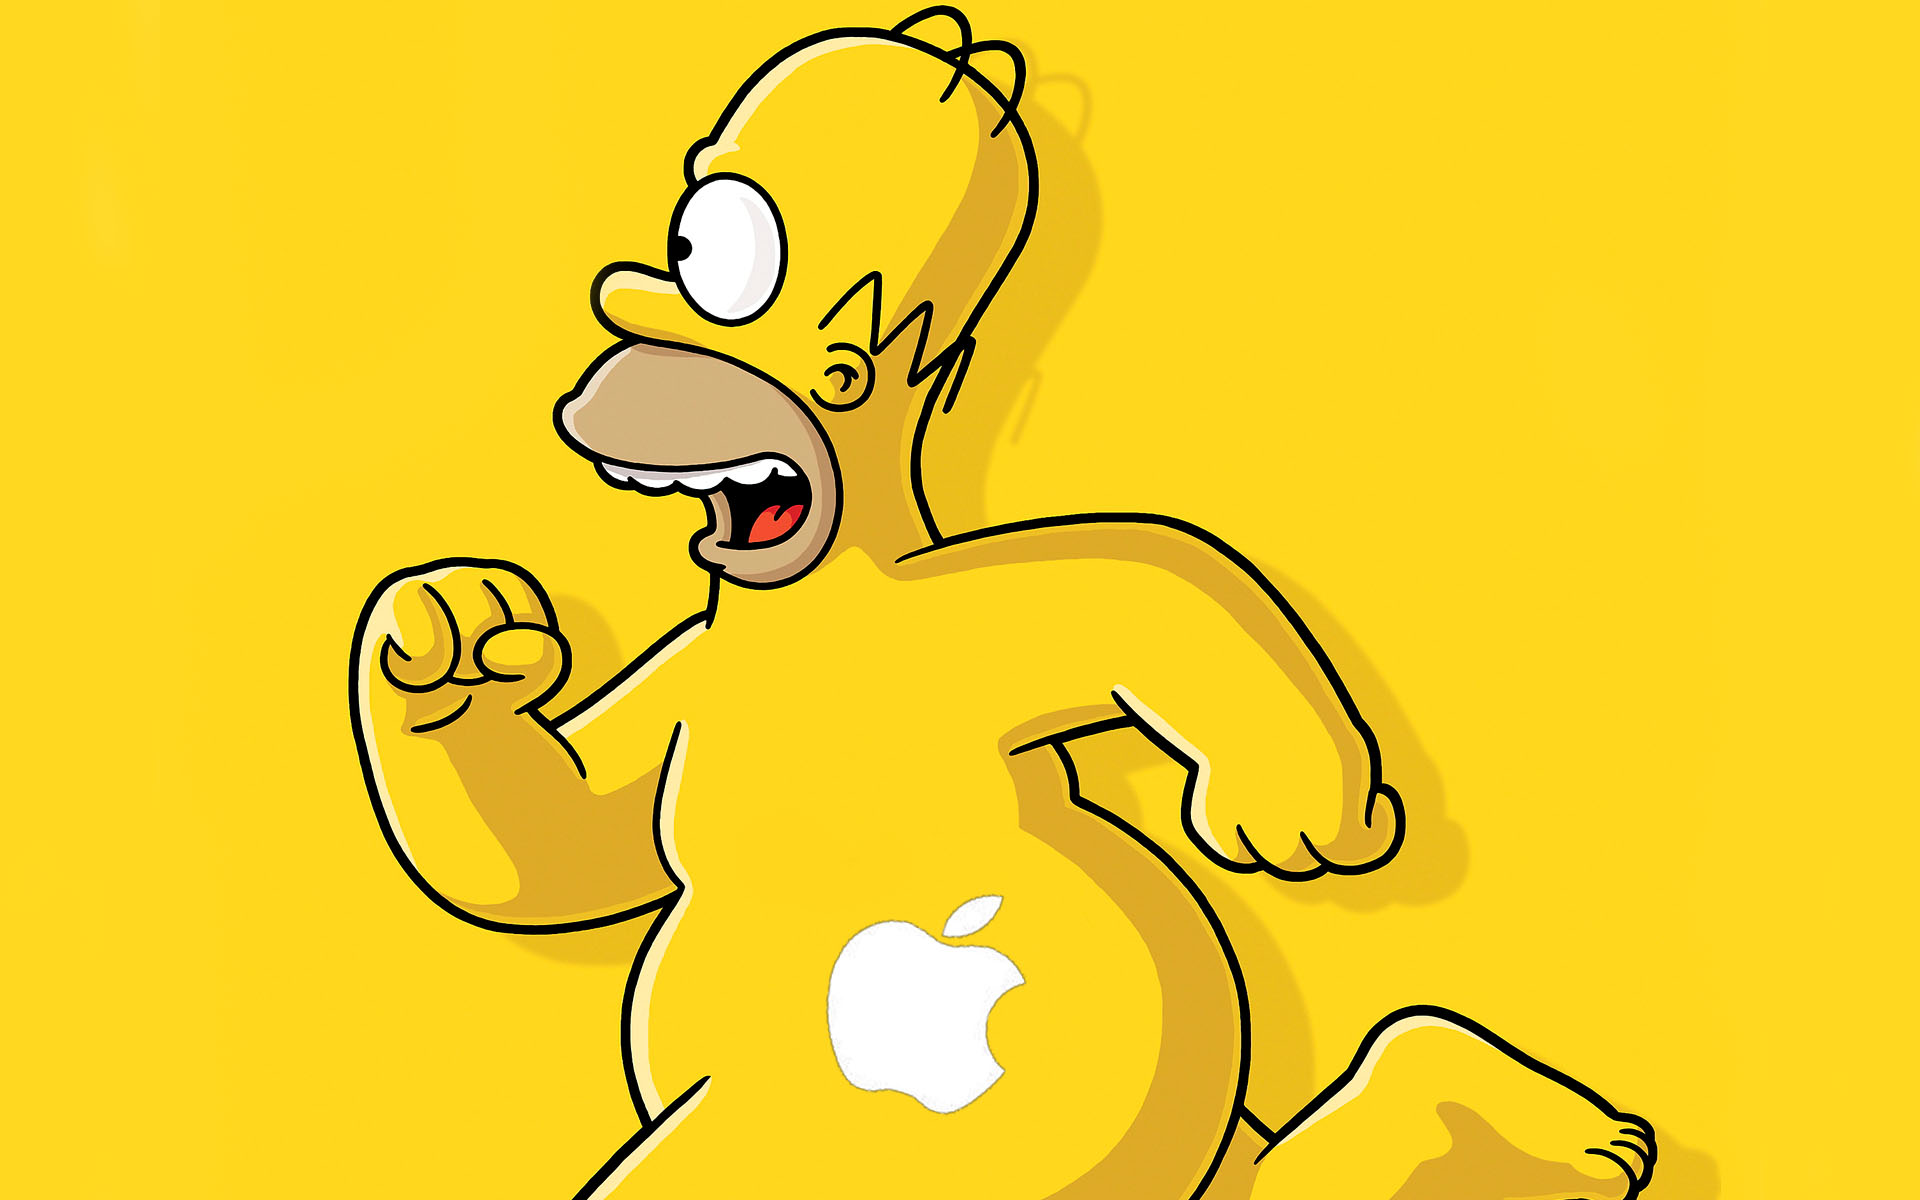 Homer Simpson wallpaper hd free download